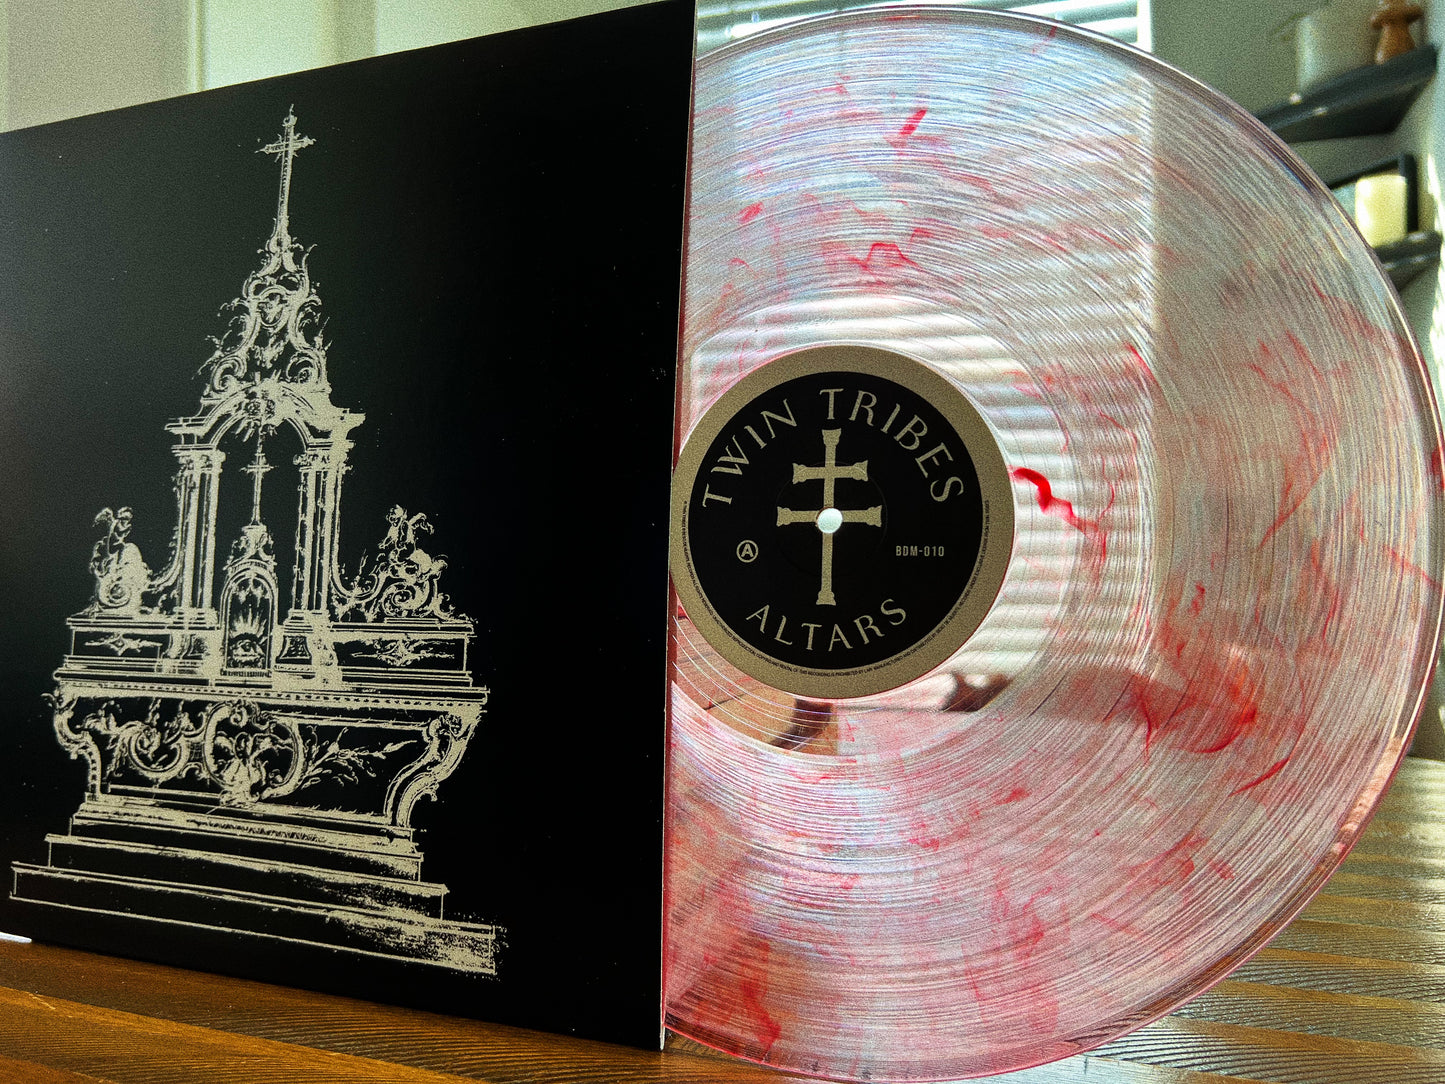 "Altars" vinyl